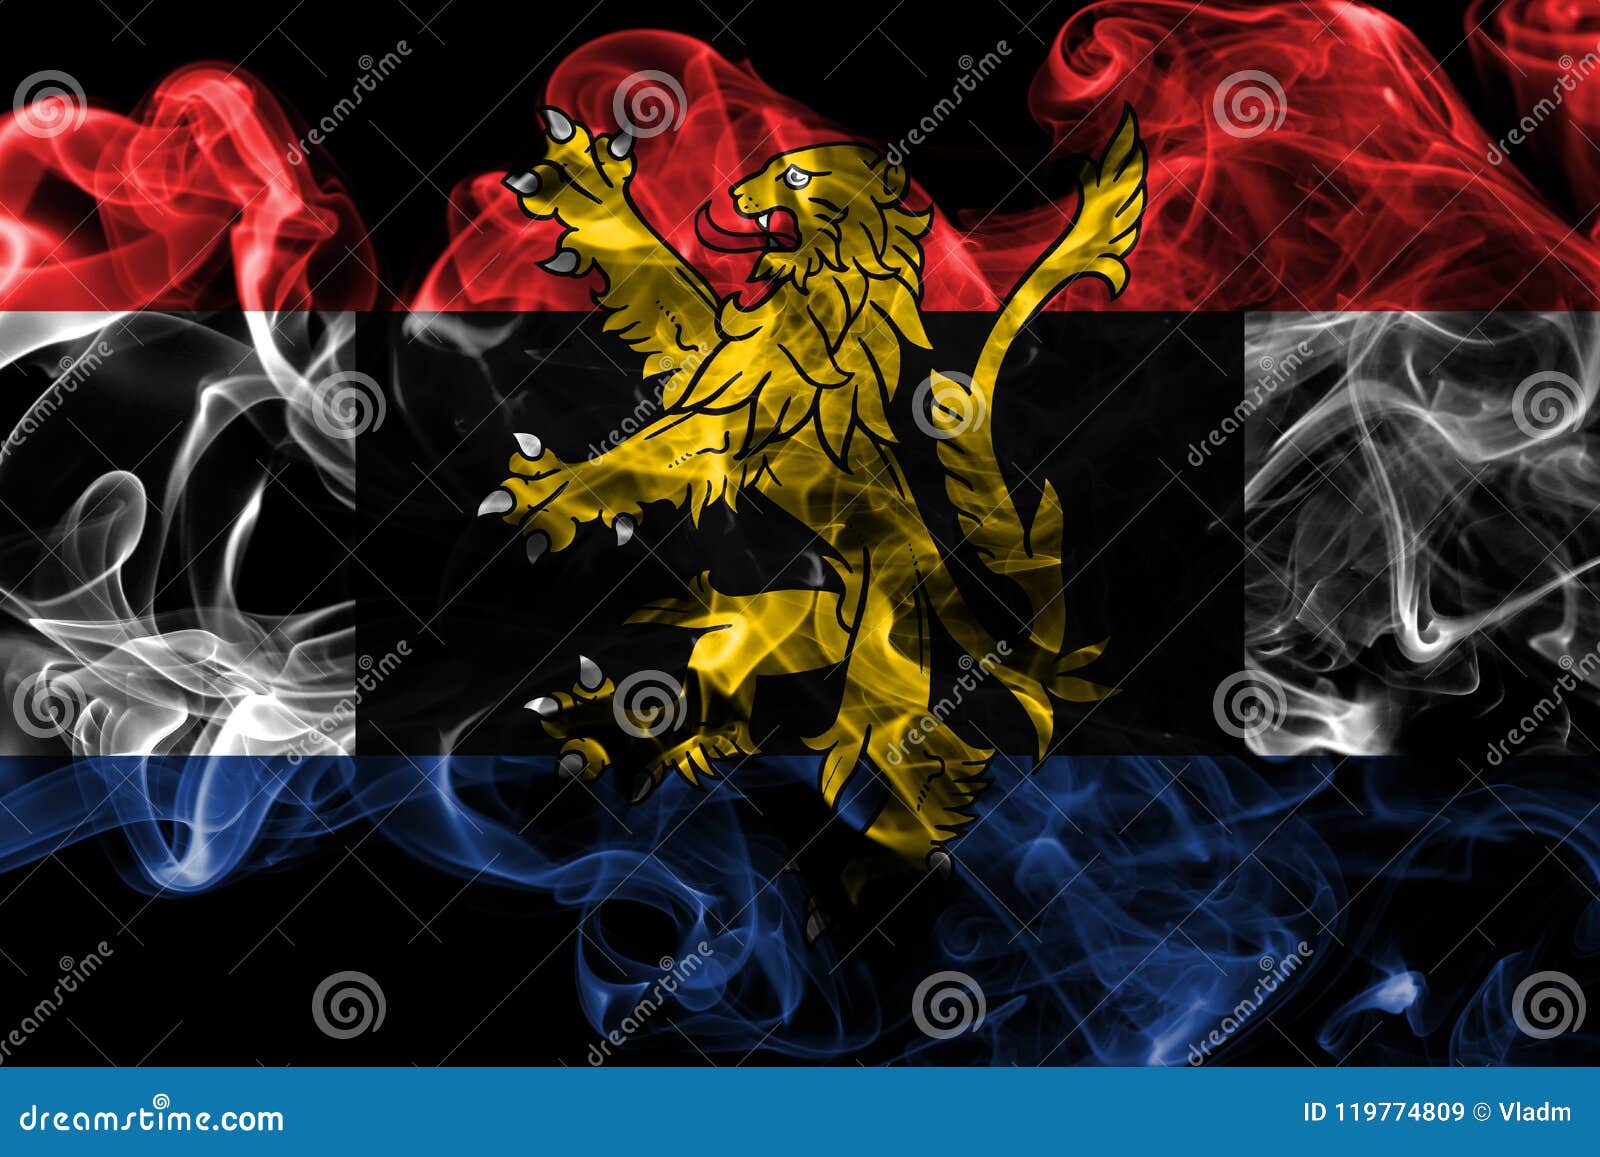 benelux smoke flag, politico-economic union of belgium, nether